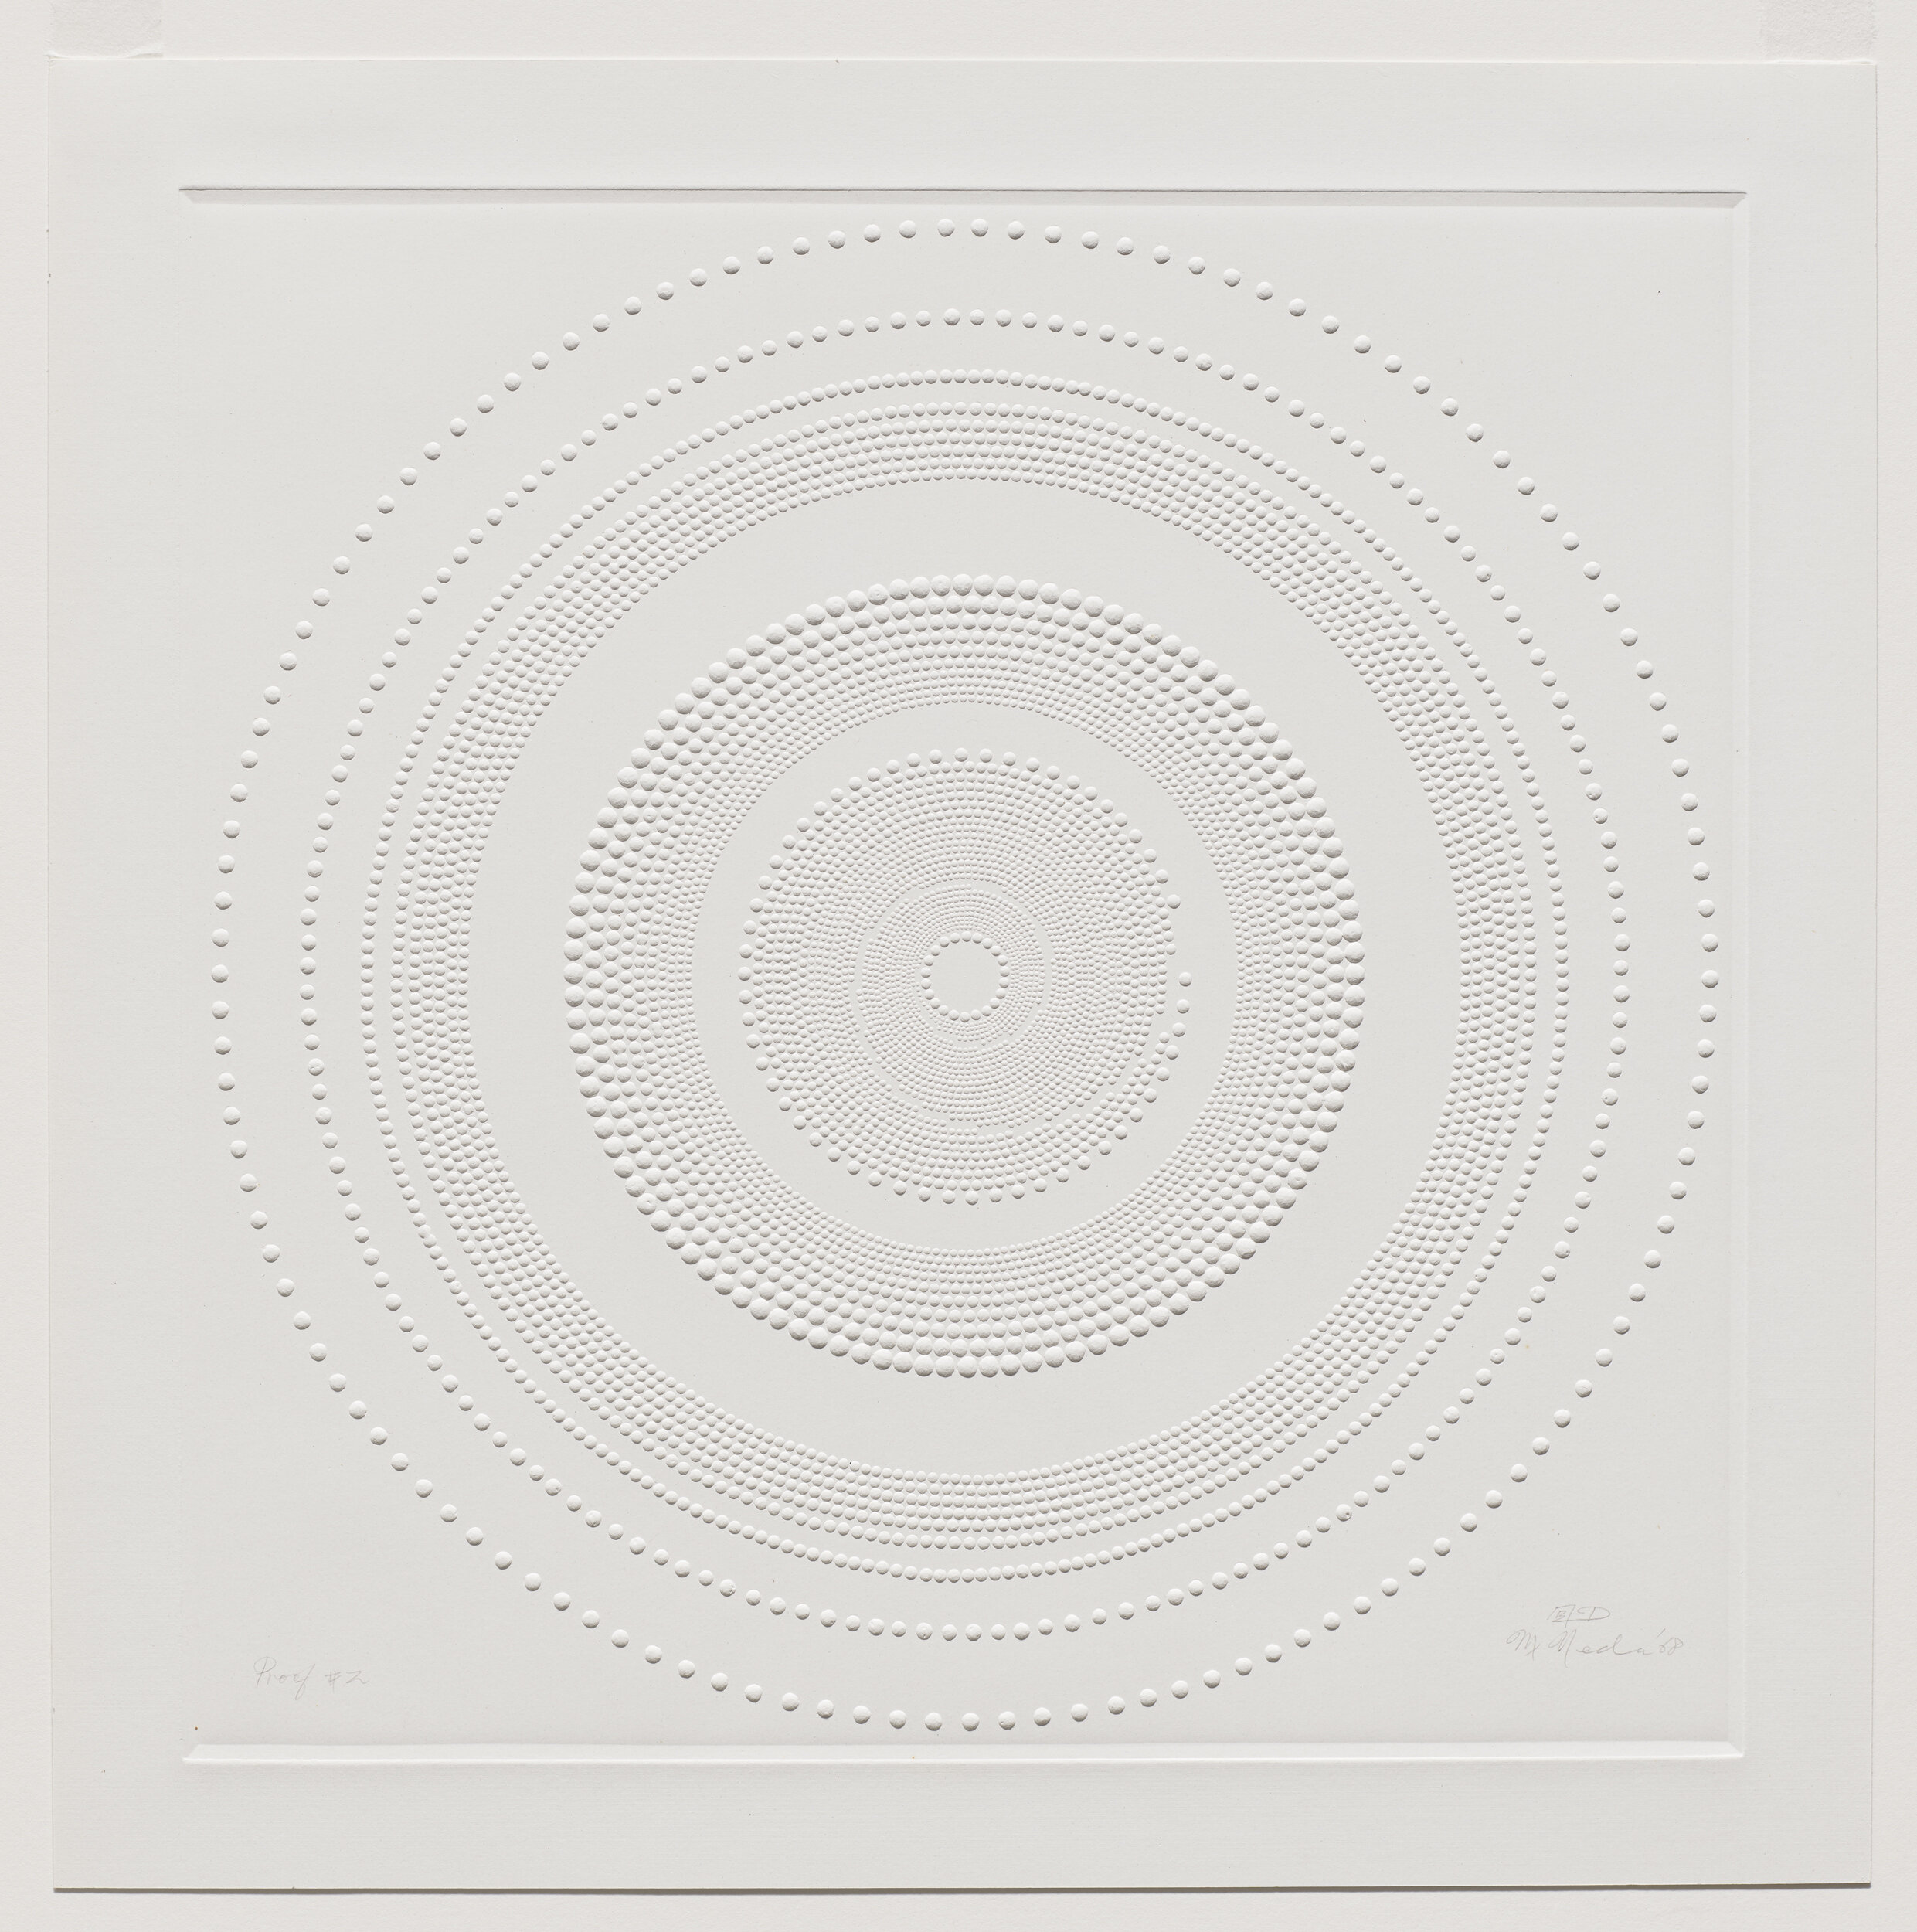  Ueda Masakatsu (Japanese, born 1925), Untitled, 1968, embossed paper, image: 16 1/16 in x 16 in; plate: 16 3/4 in x 16 11/16 in; sheet: 19 1/2 in x 19 3/4 in, Museum Purchase: Caroline Ladd Pratt Fund. Portland Art Museum, Portland, Oregon, 78.46.3 